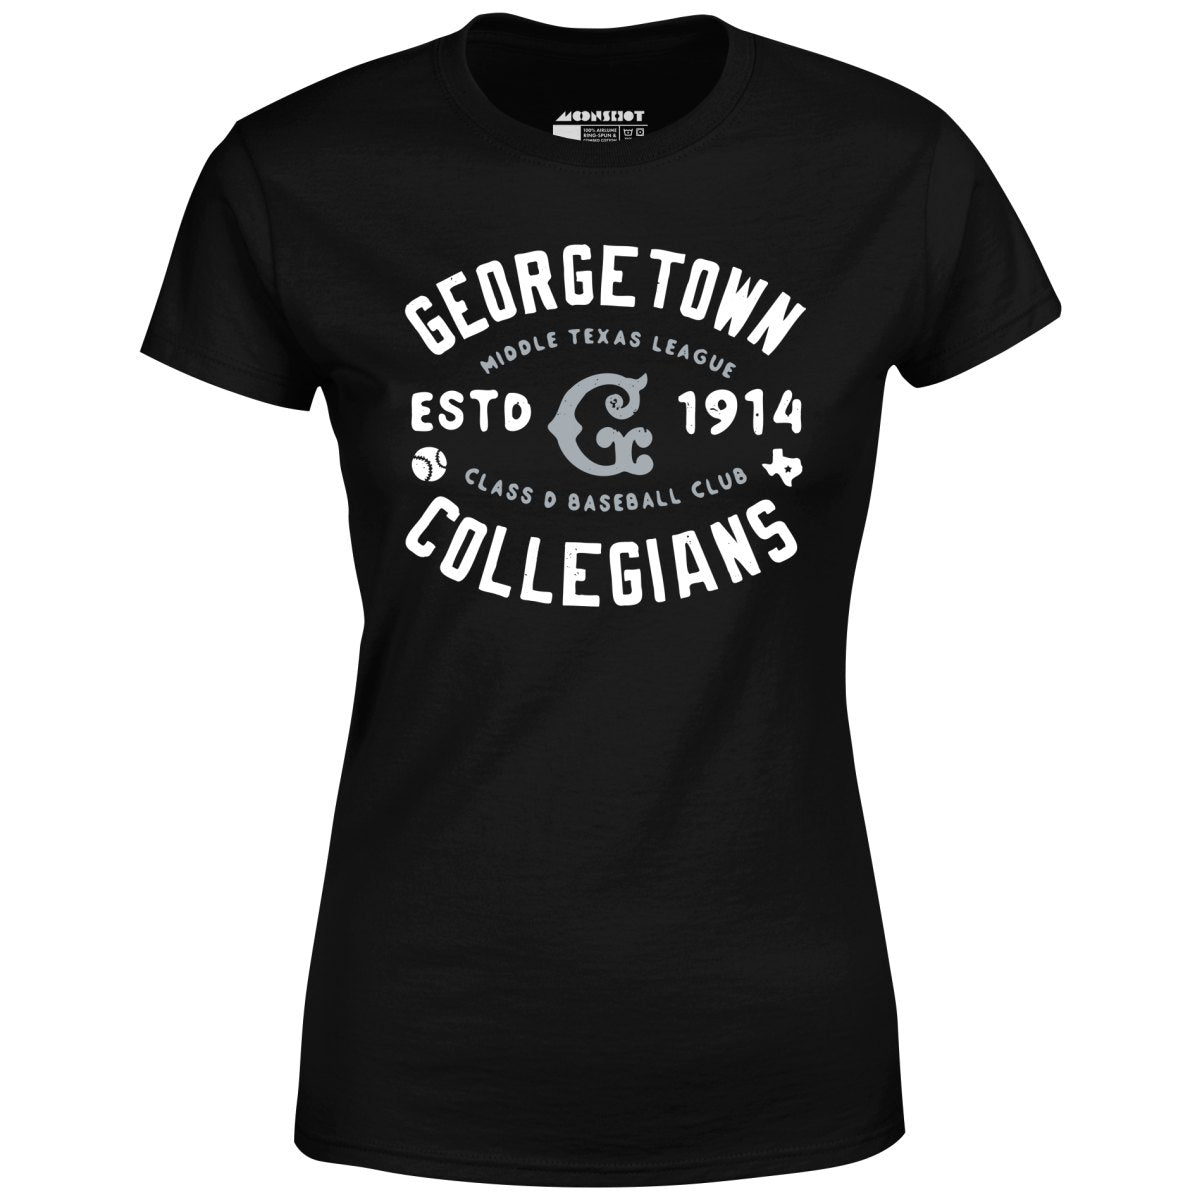 Georgetown Collegians - Texas - Vintage Defunct Baseball Teams - Women's T-Shirt